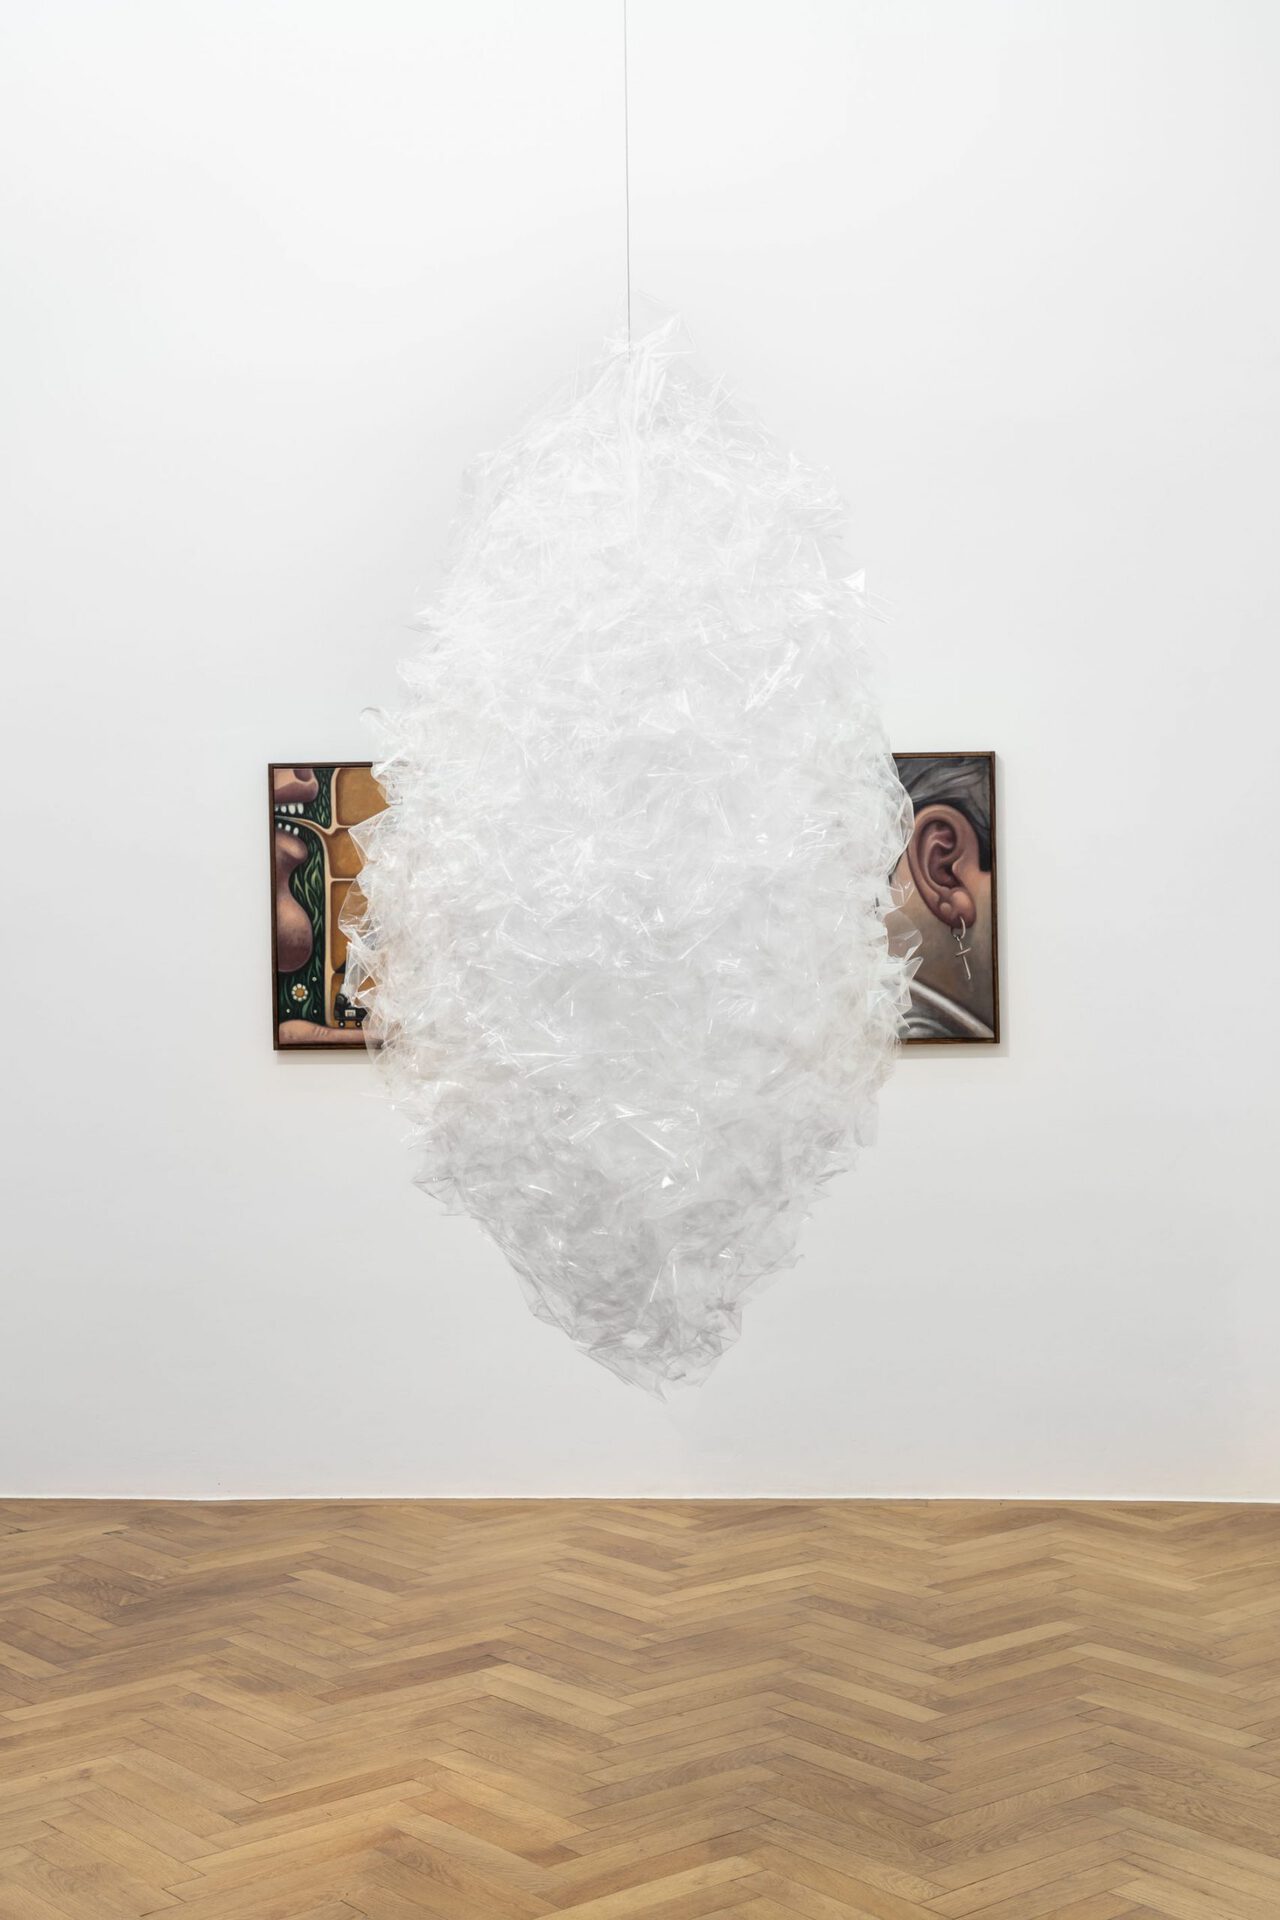 Sveta Mordovskaya, Cocoon, 2021, gift foils, dimensions variable, Courtesy the artist and Weiss Falk, Basel.